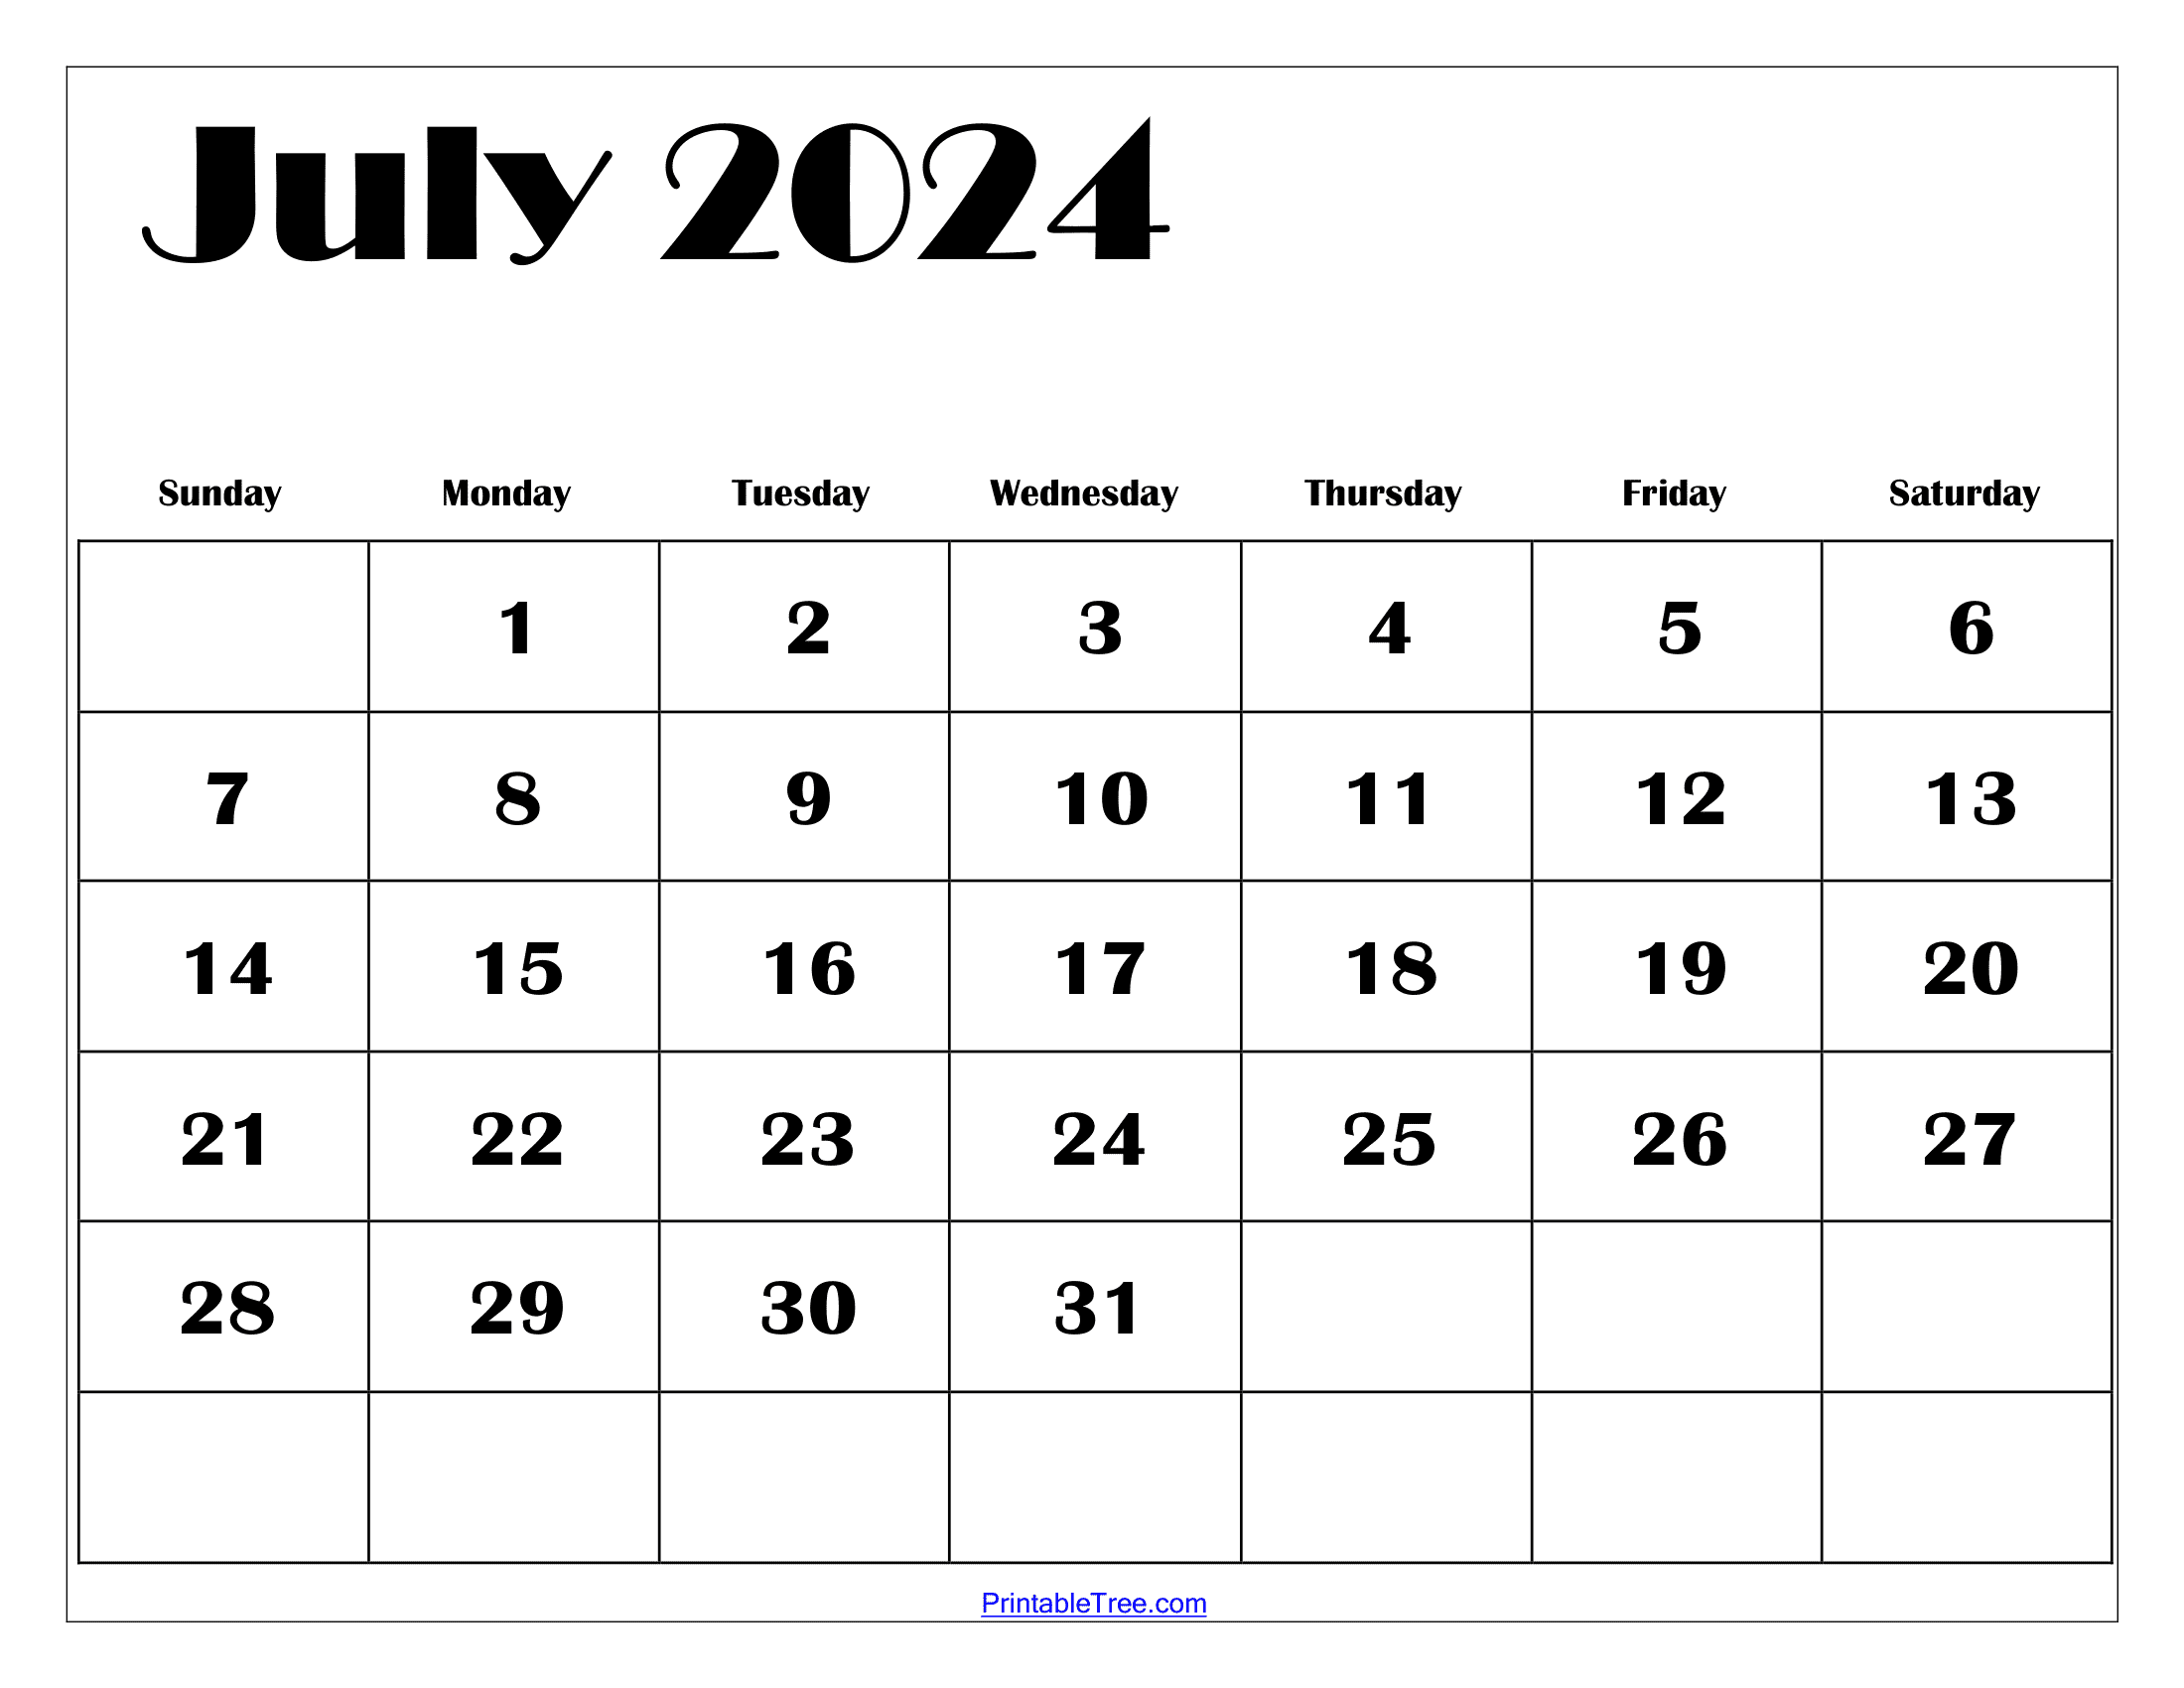 July 2024 Calendar Printable Pdf With Holidays Free Template for July 2024 Free Printable Calendar